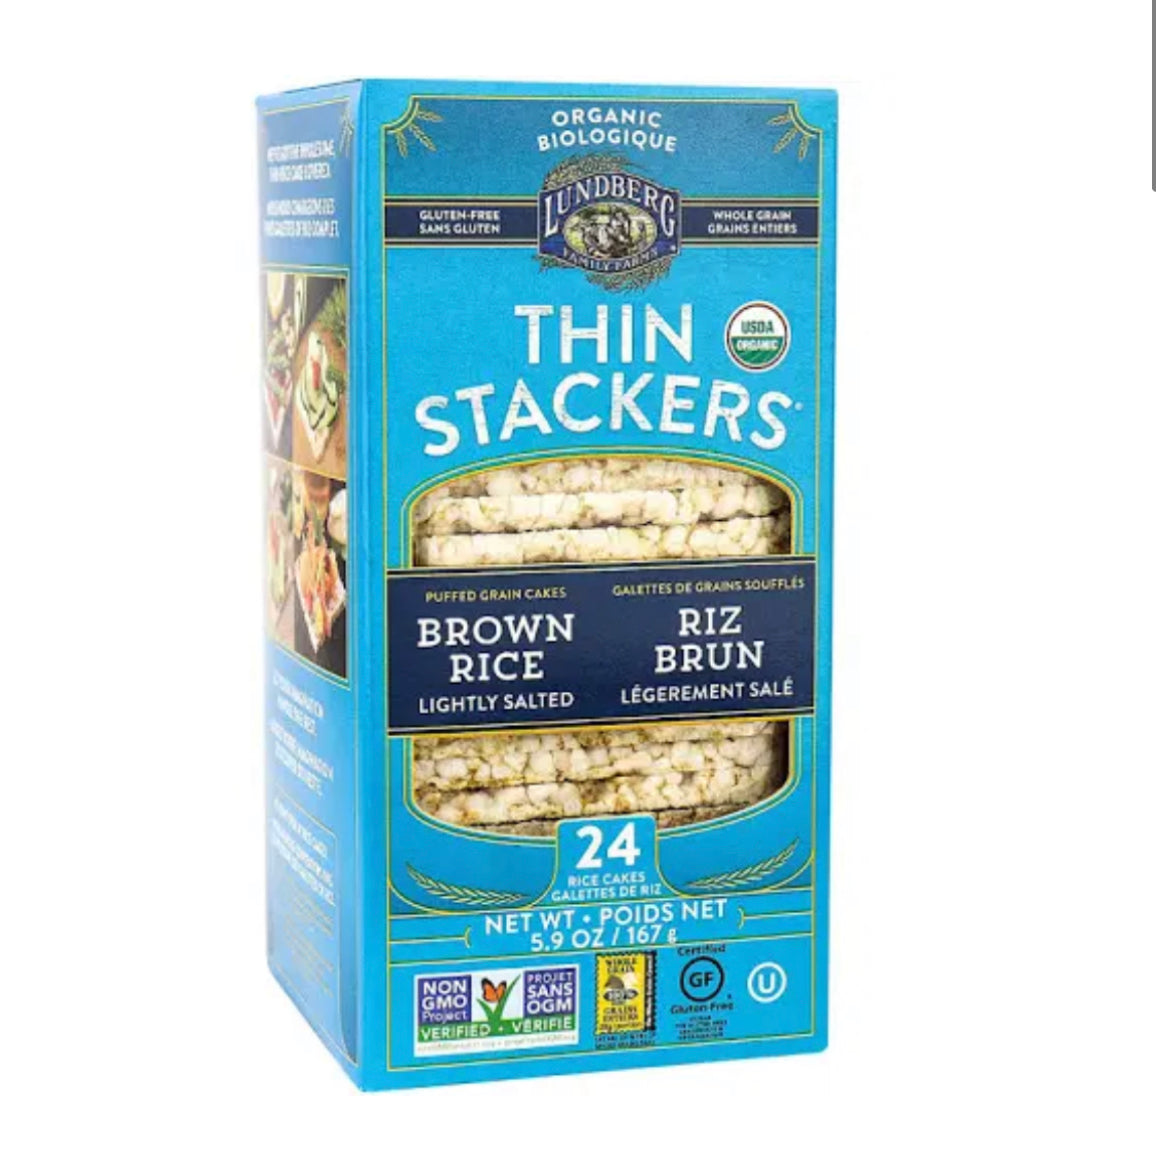 Lundberg Thin Stackers Rice Cakes - 167g